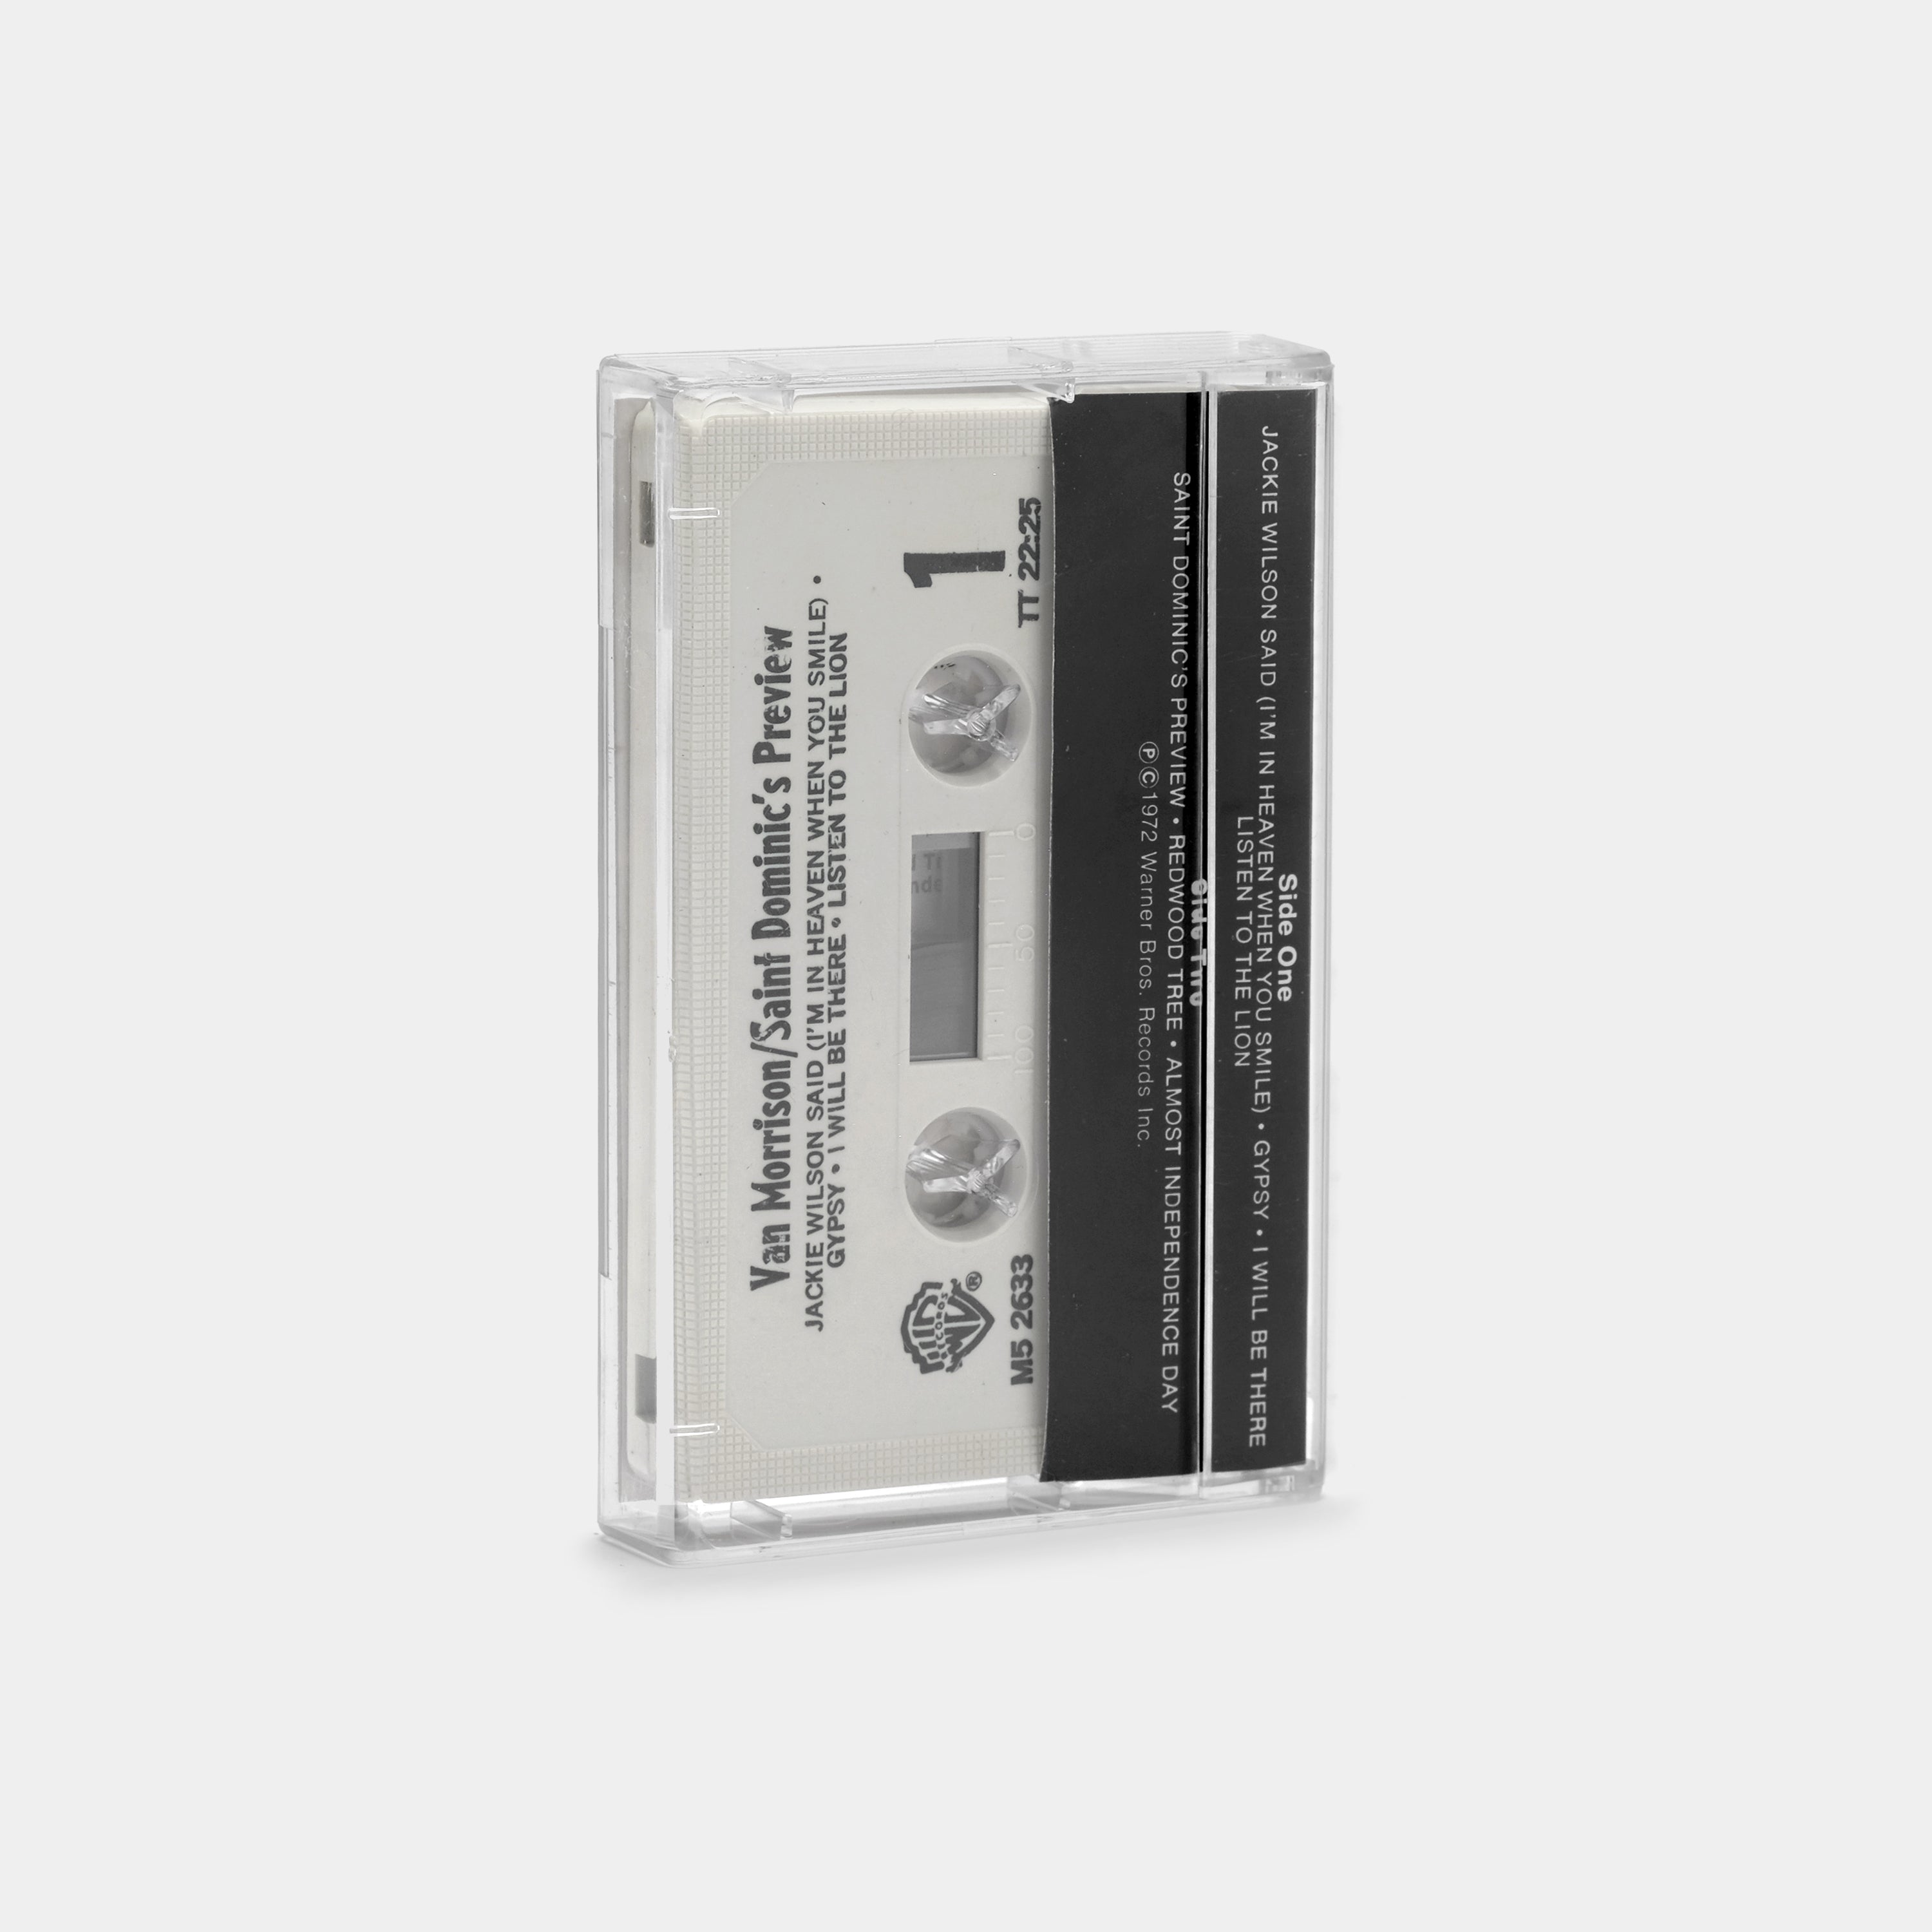 Van Morrison - Saint Dominic's Preview Cassette Tape